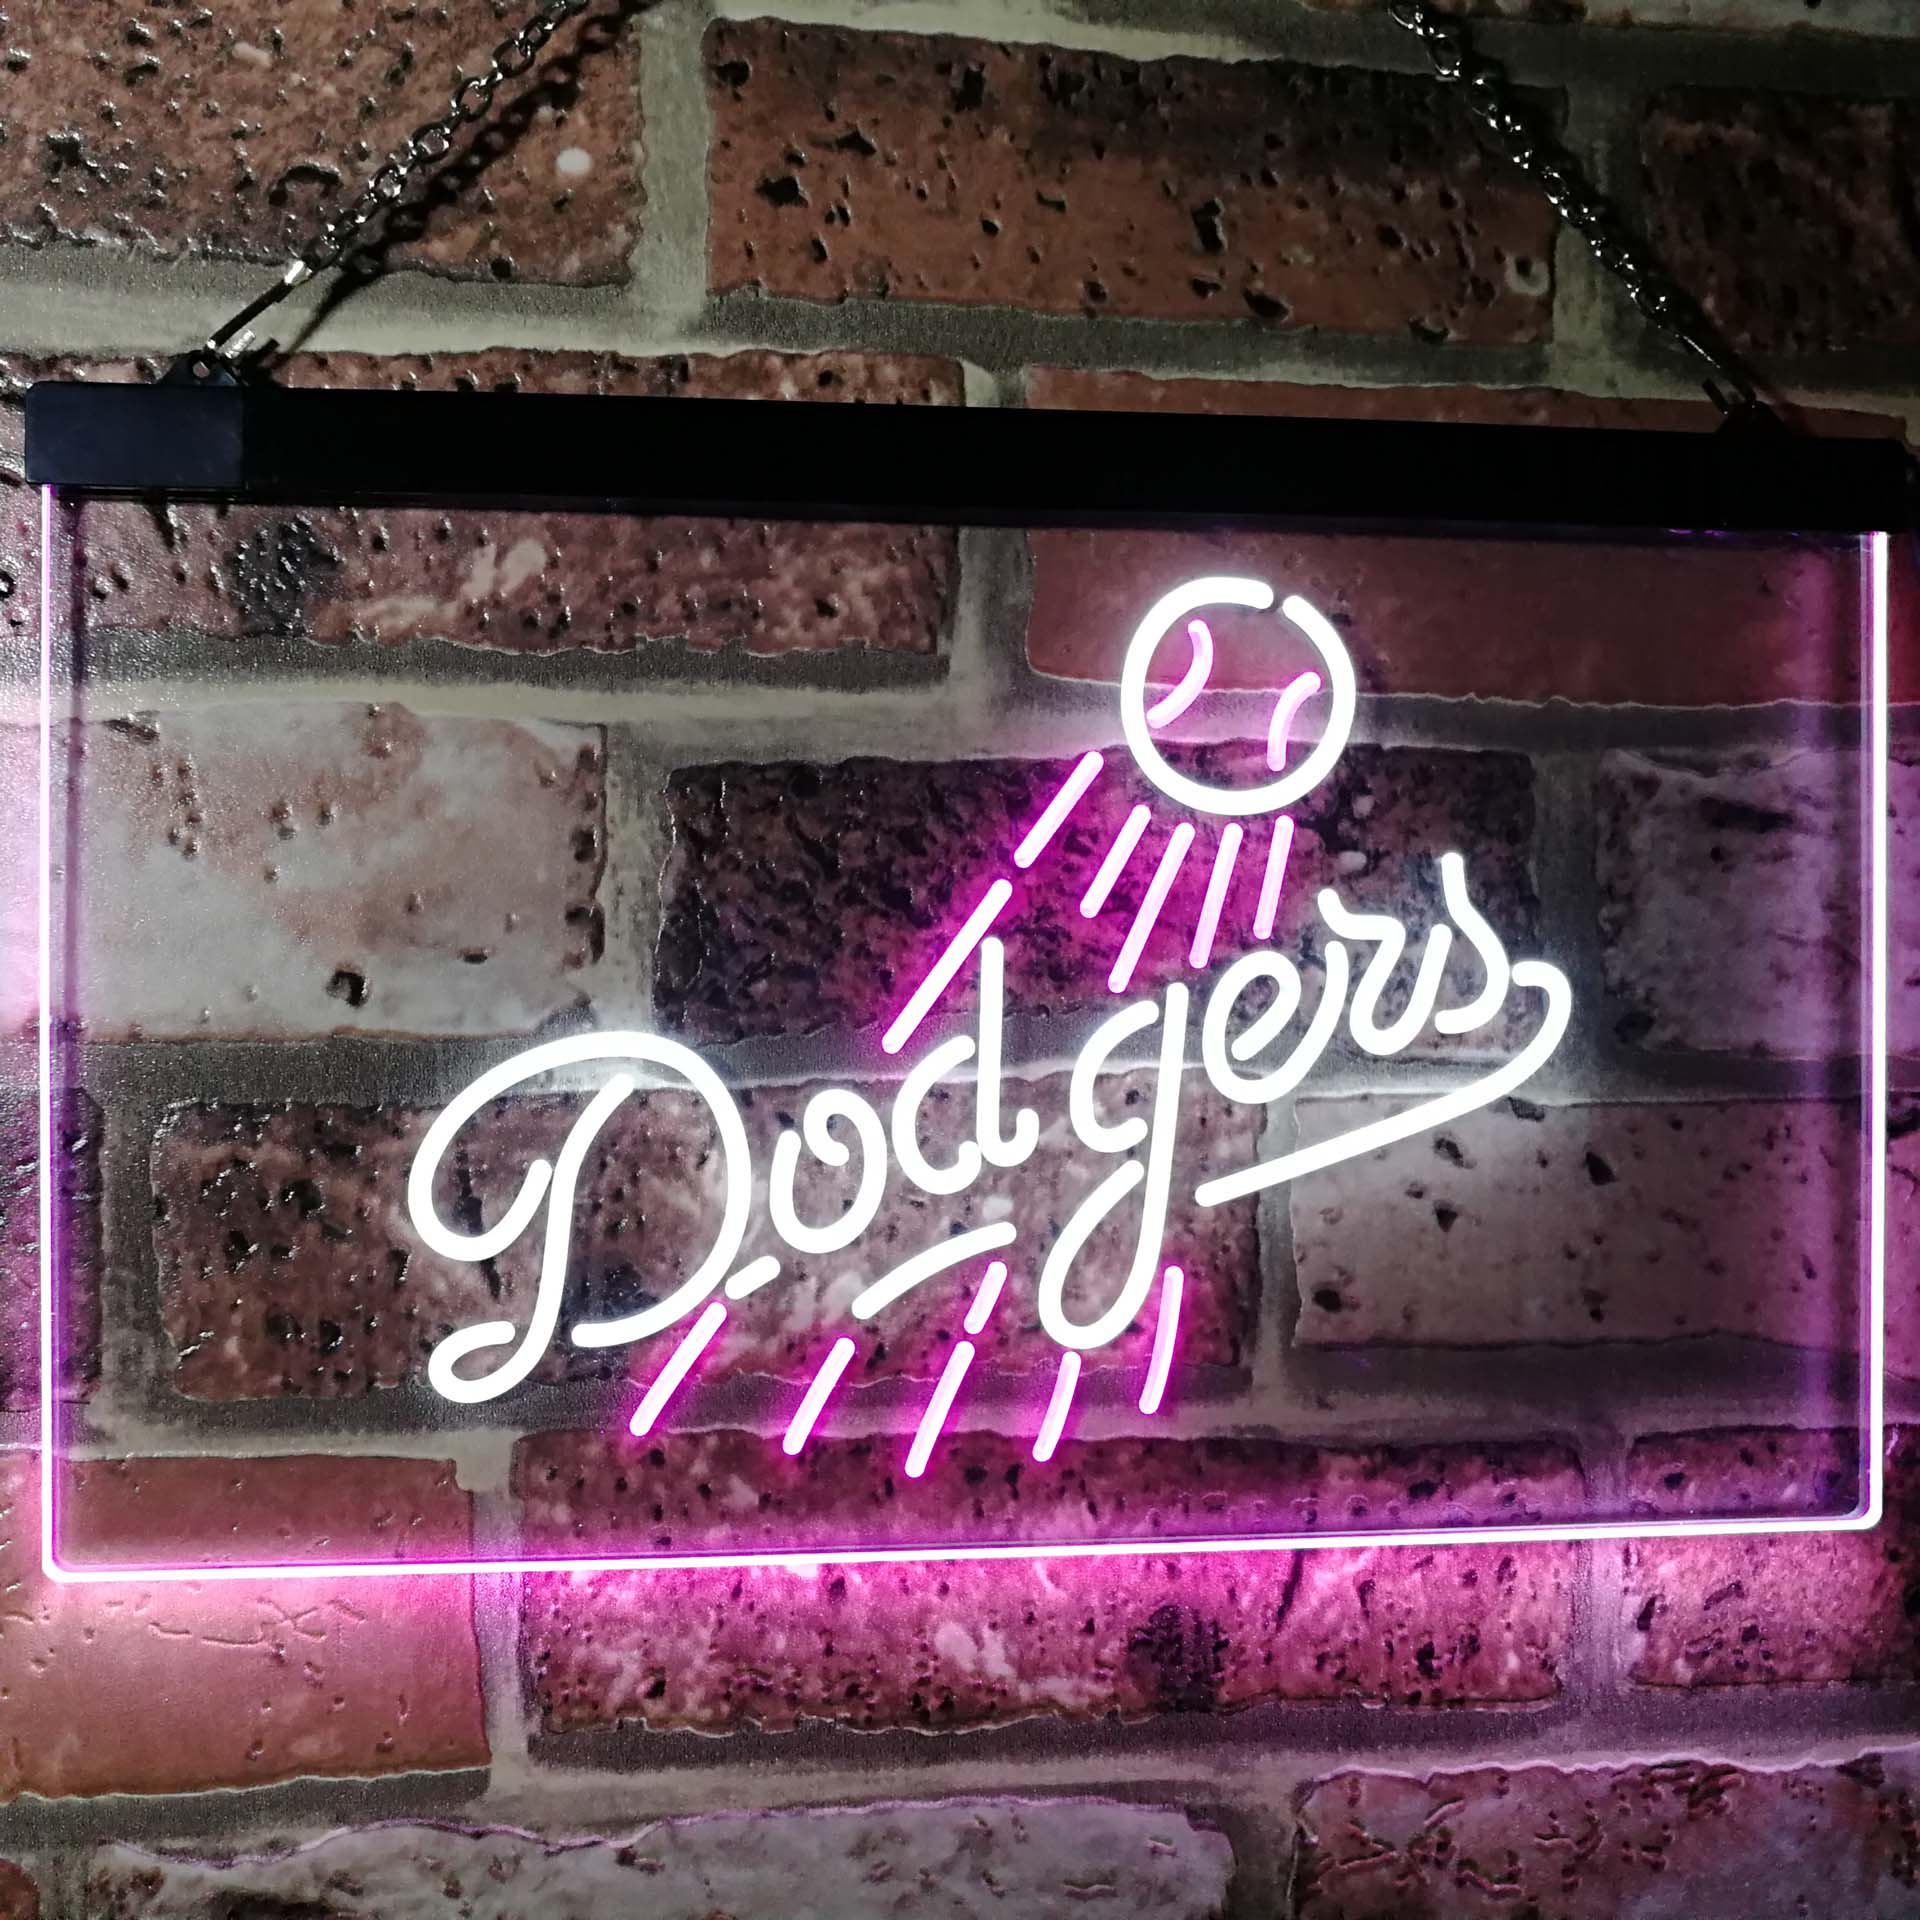 Dodge Man Cave Neon Sign